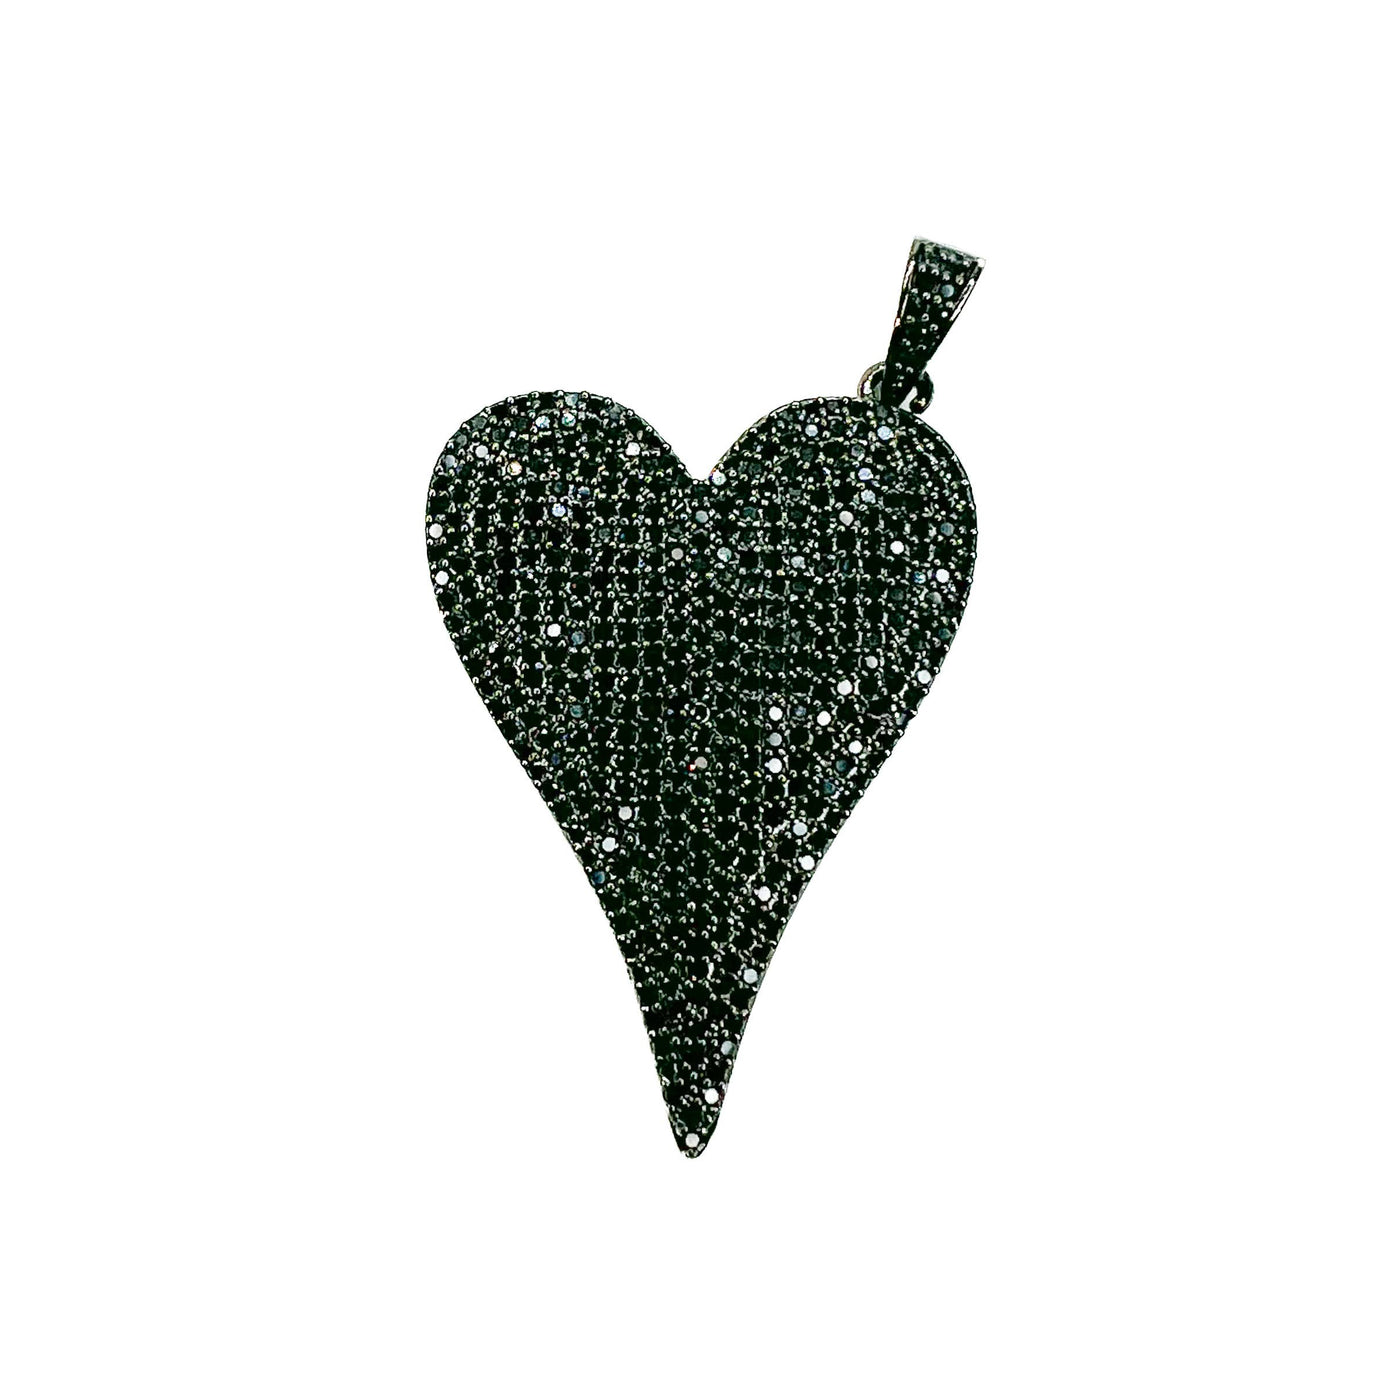 Heart CZ Necklace Charm - Black CZ